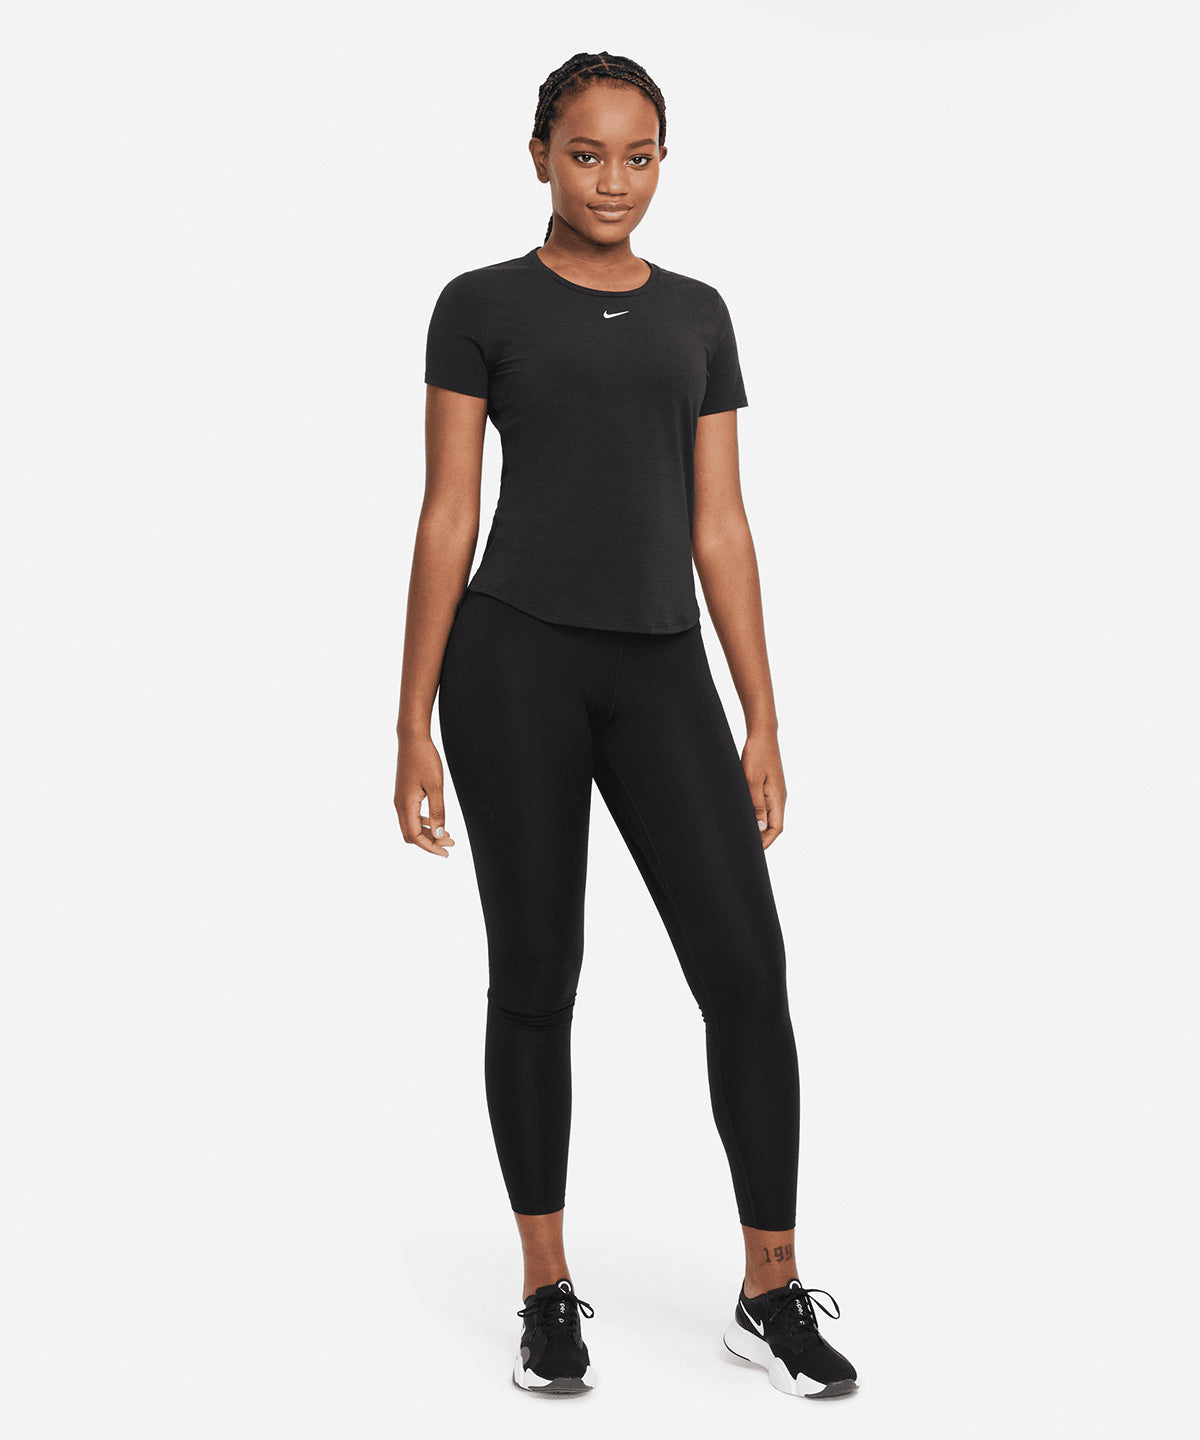 Women’s Nike One Luxe Dri-FIT Short Sleeve Standard Fit Top